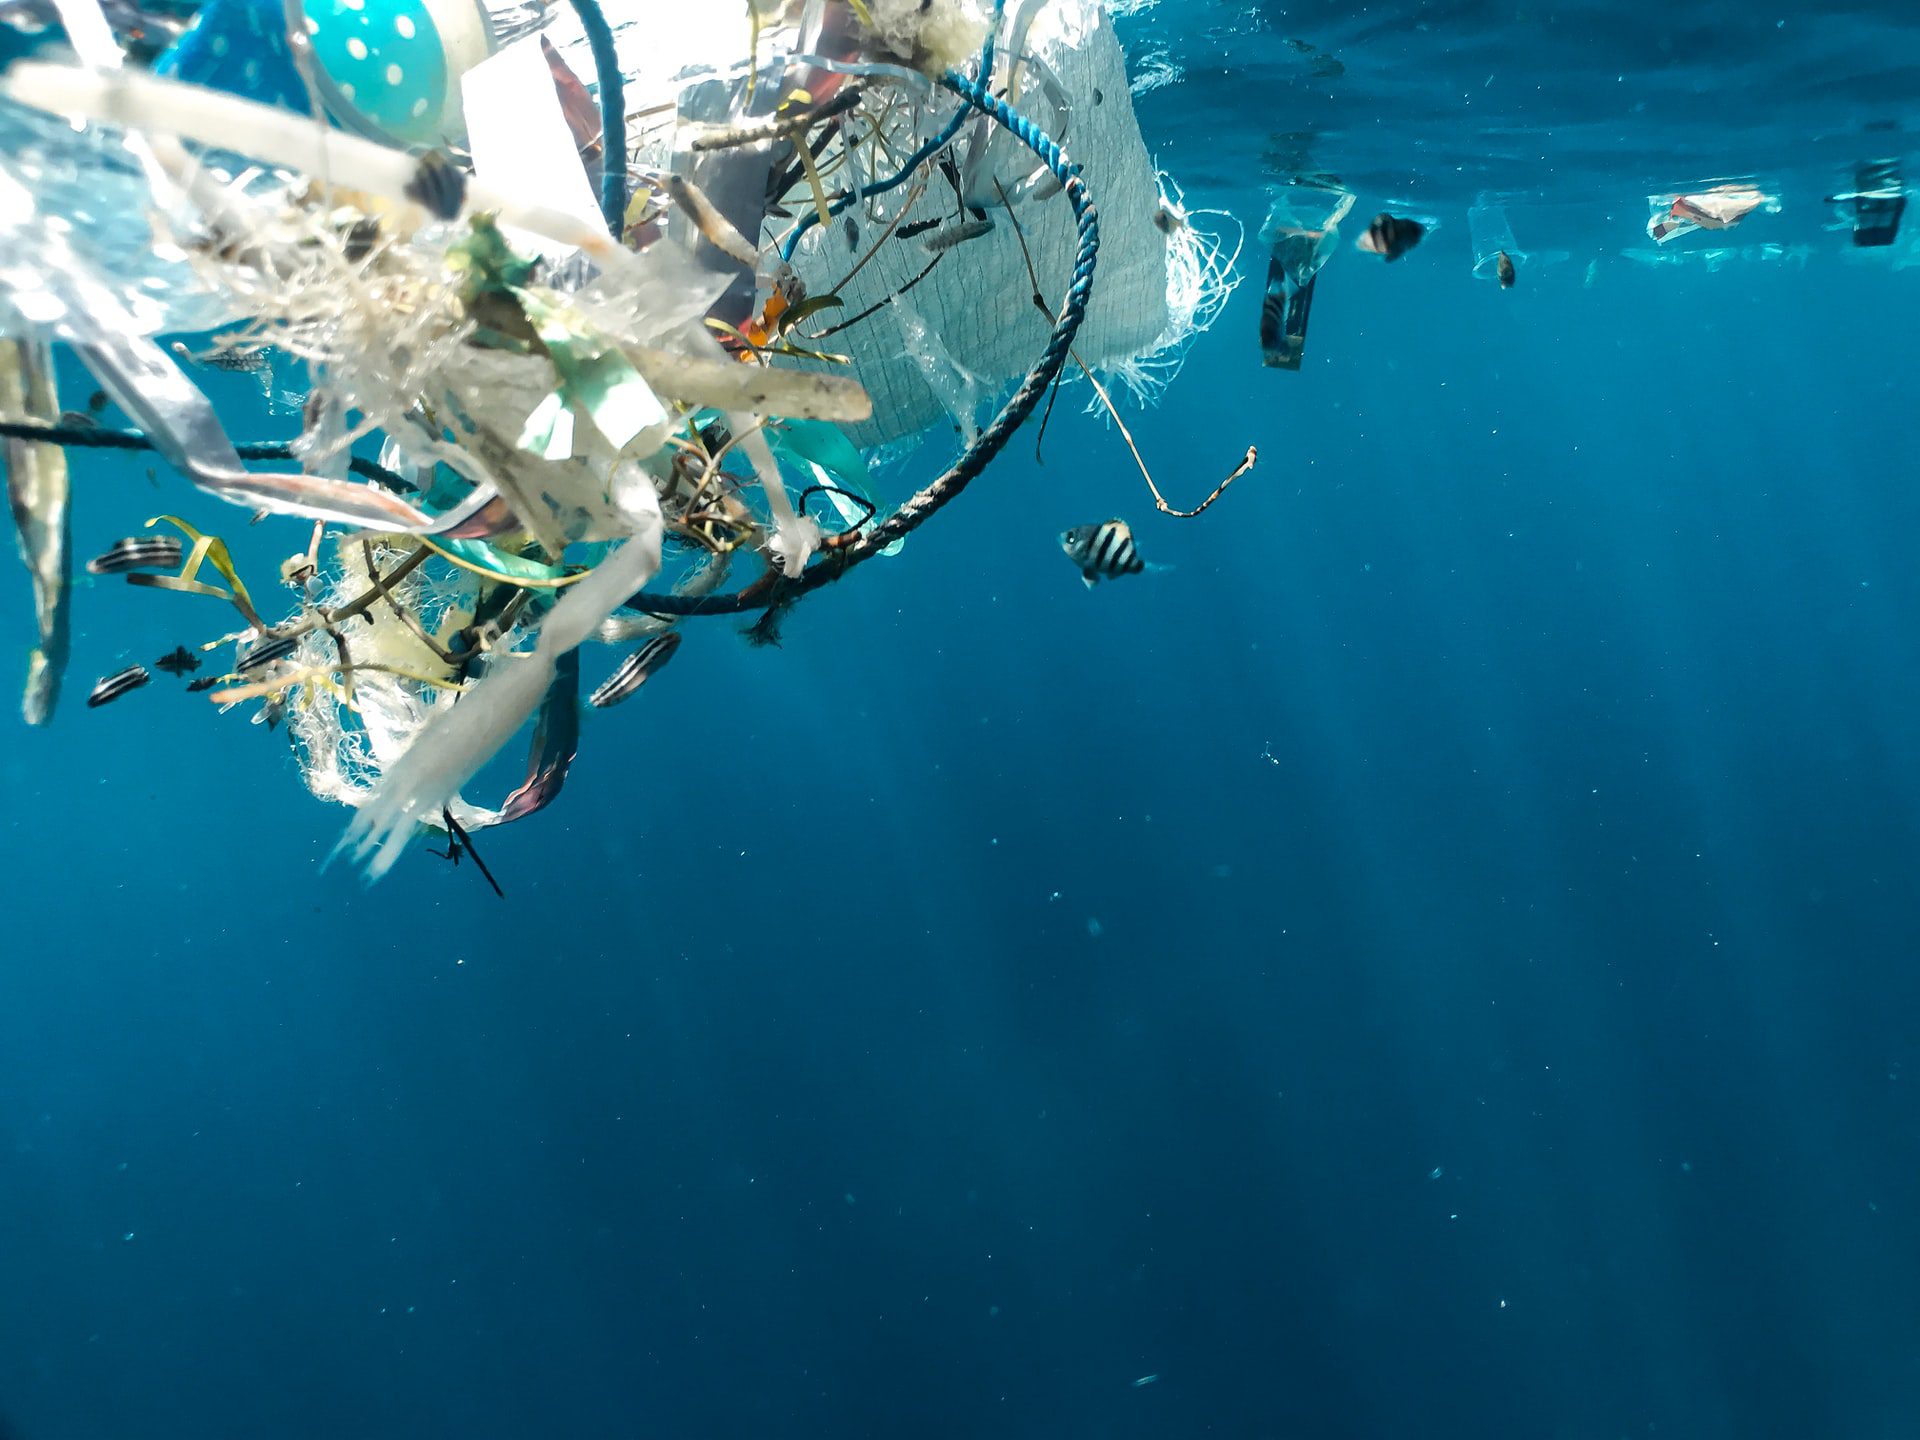 Ridurre i rifiuti marini si può! l’Italia vince il LIFE AWARDS 2022